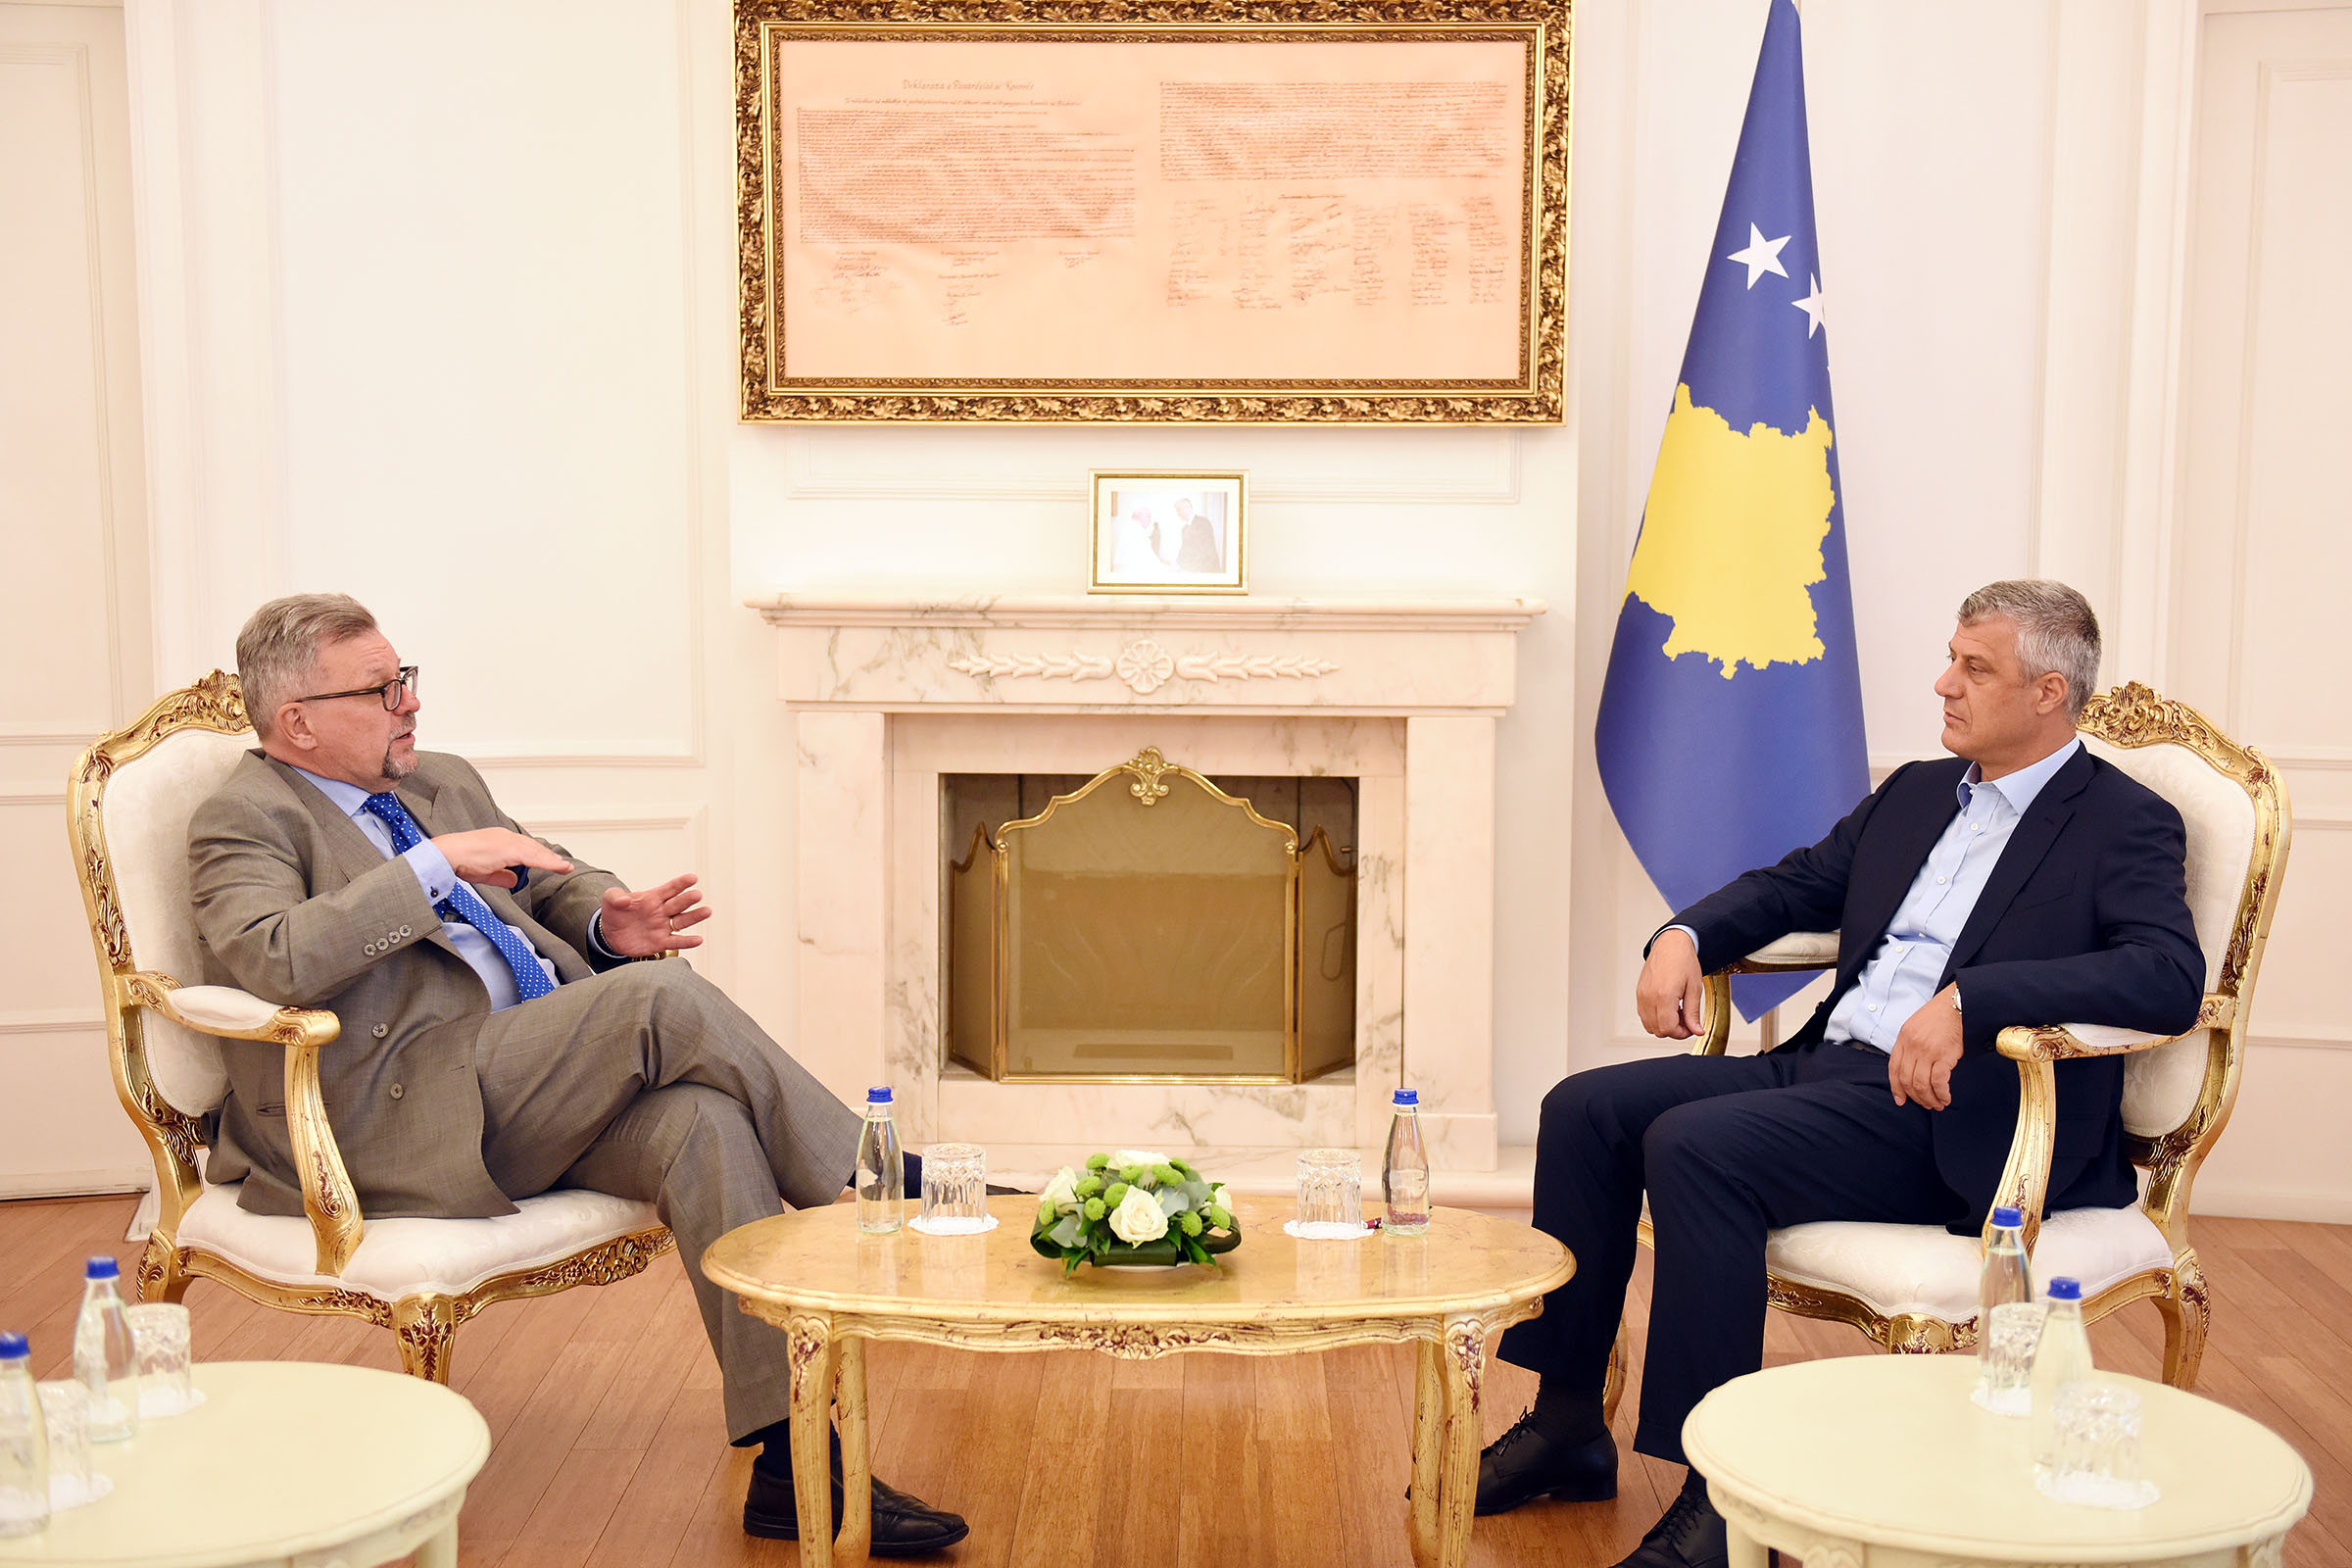 25_07_2016_6194959_Presidenti_Thaci_priti_ambasadorin_suedez_jorezident_per_Kosoven